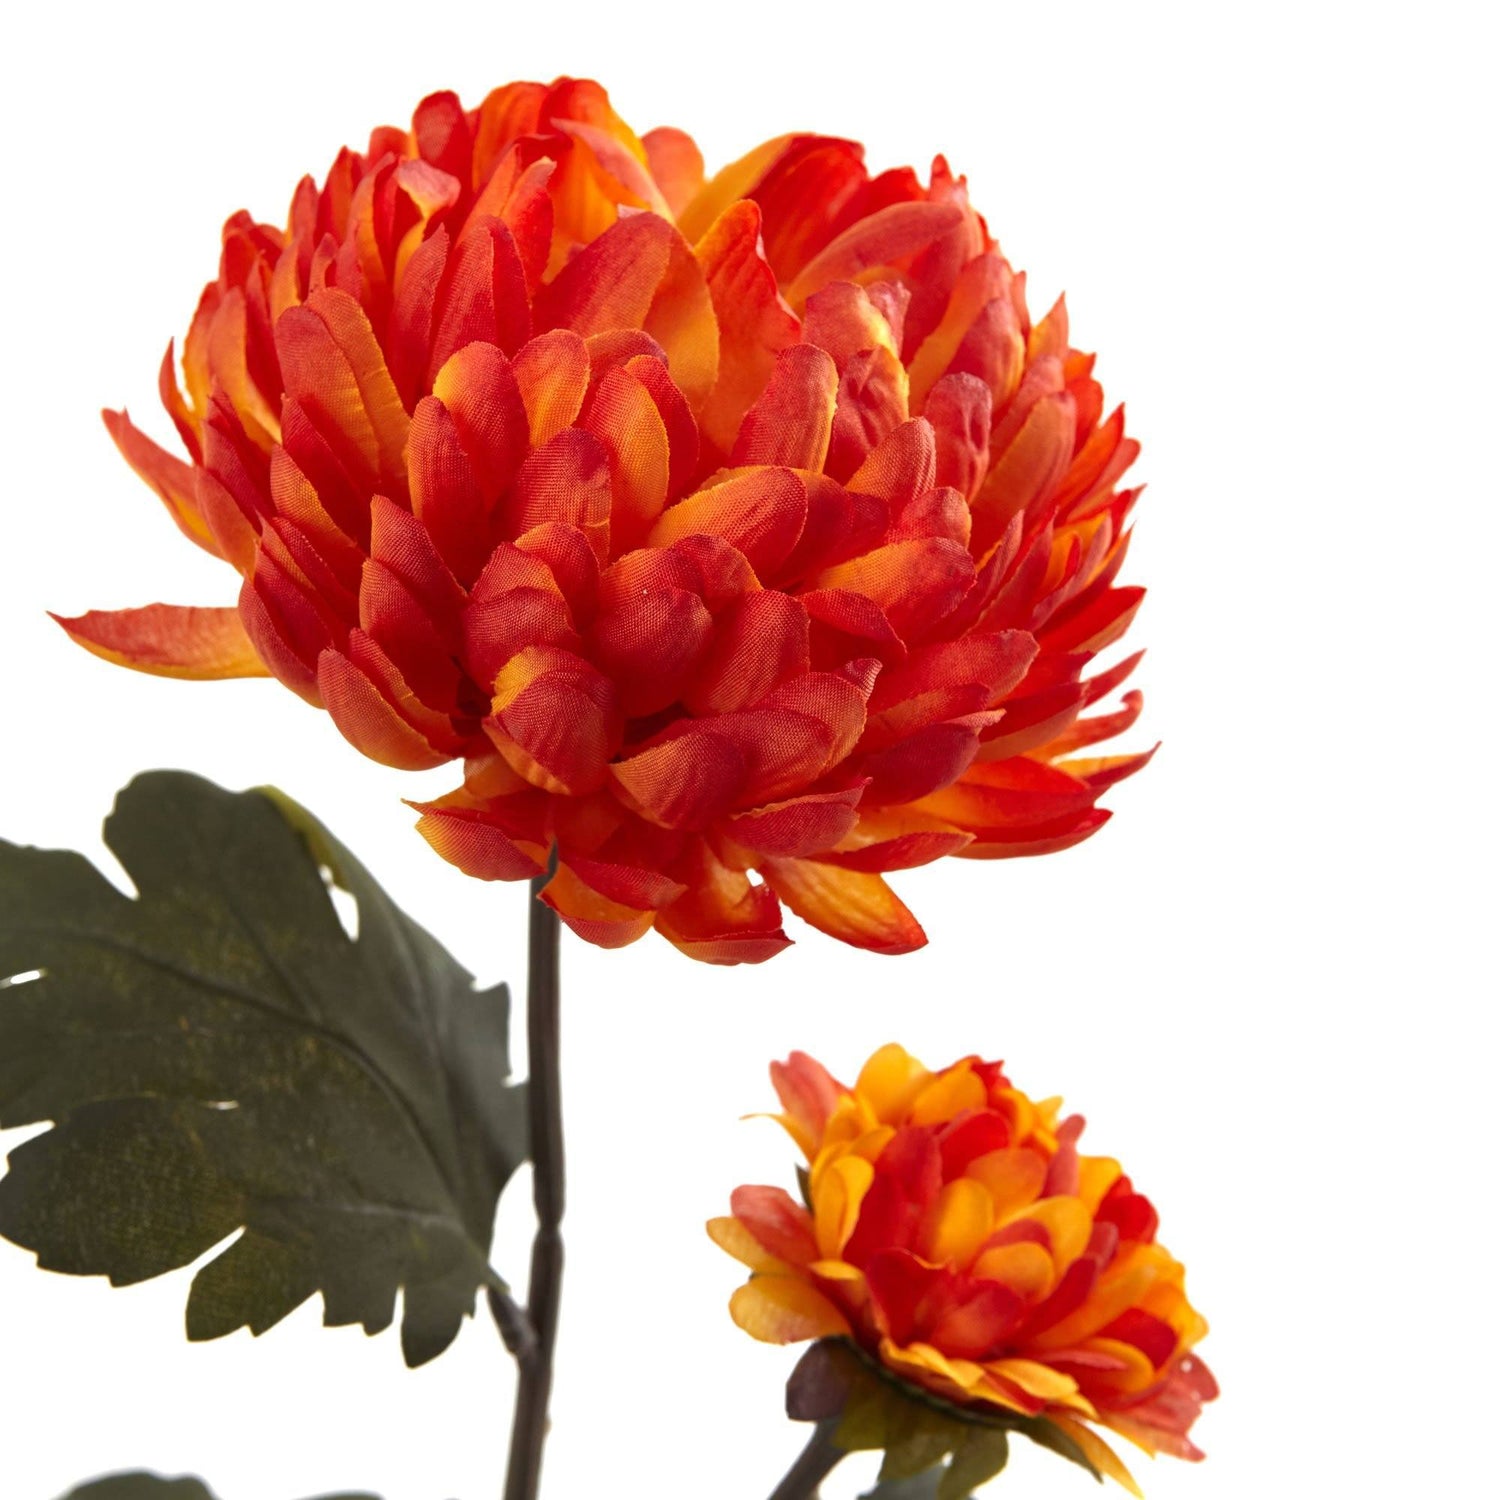 29” Chrysanthemum Artificial Flower (Set of 12)